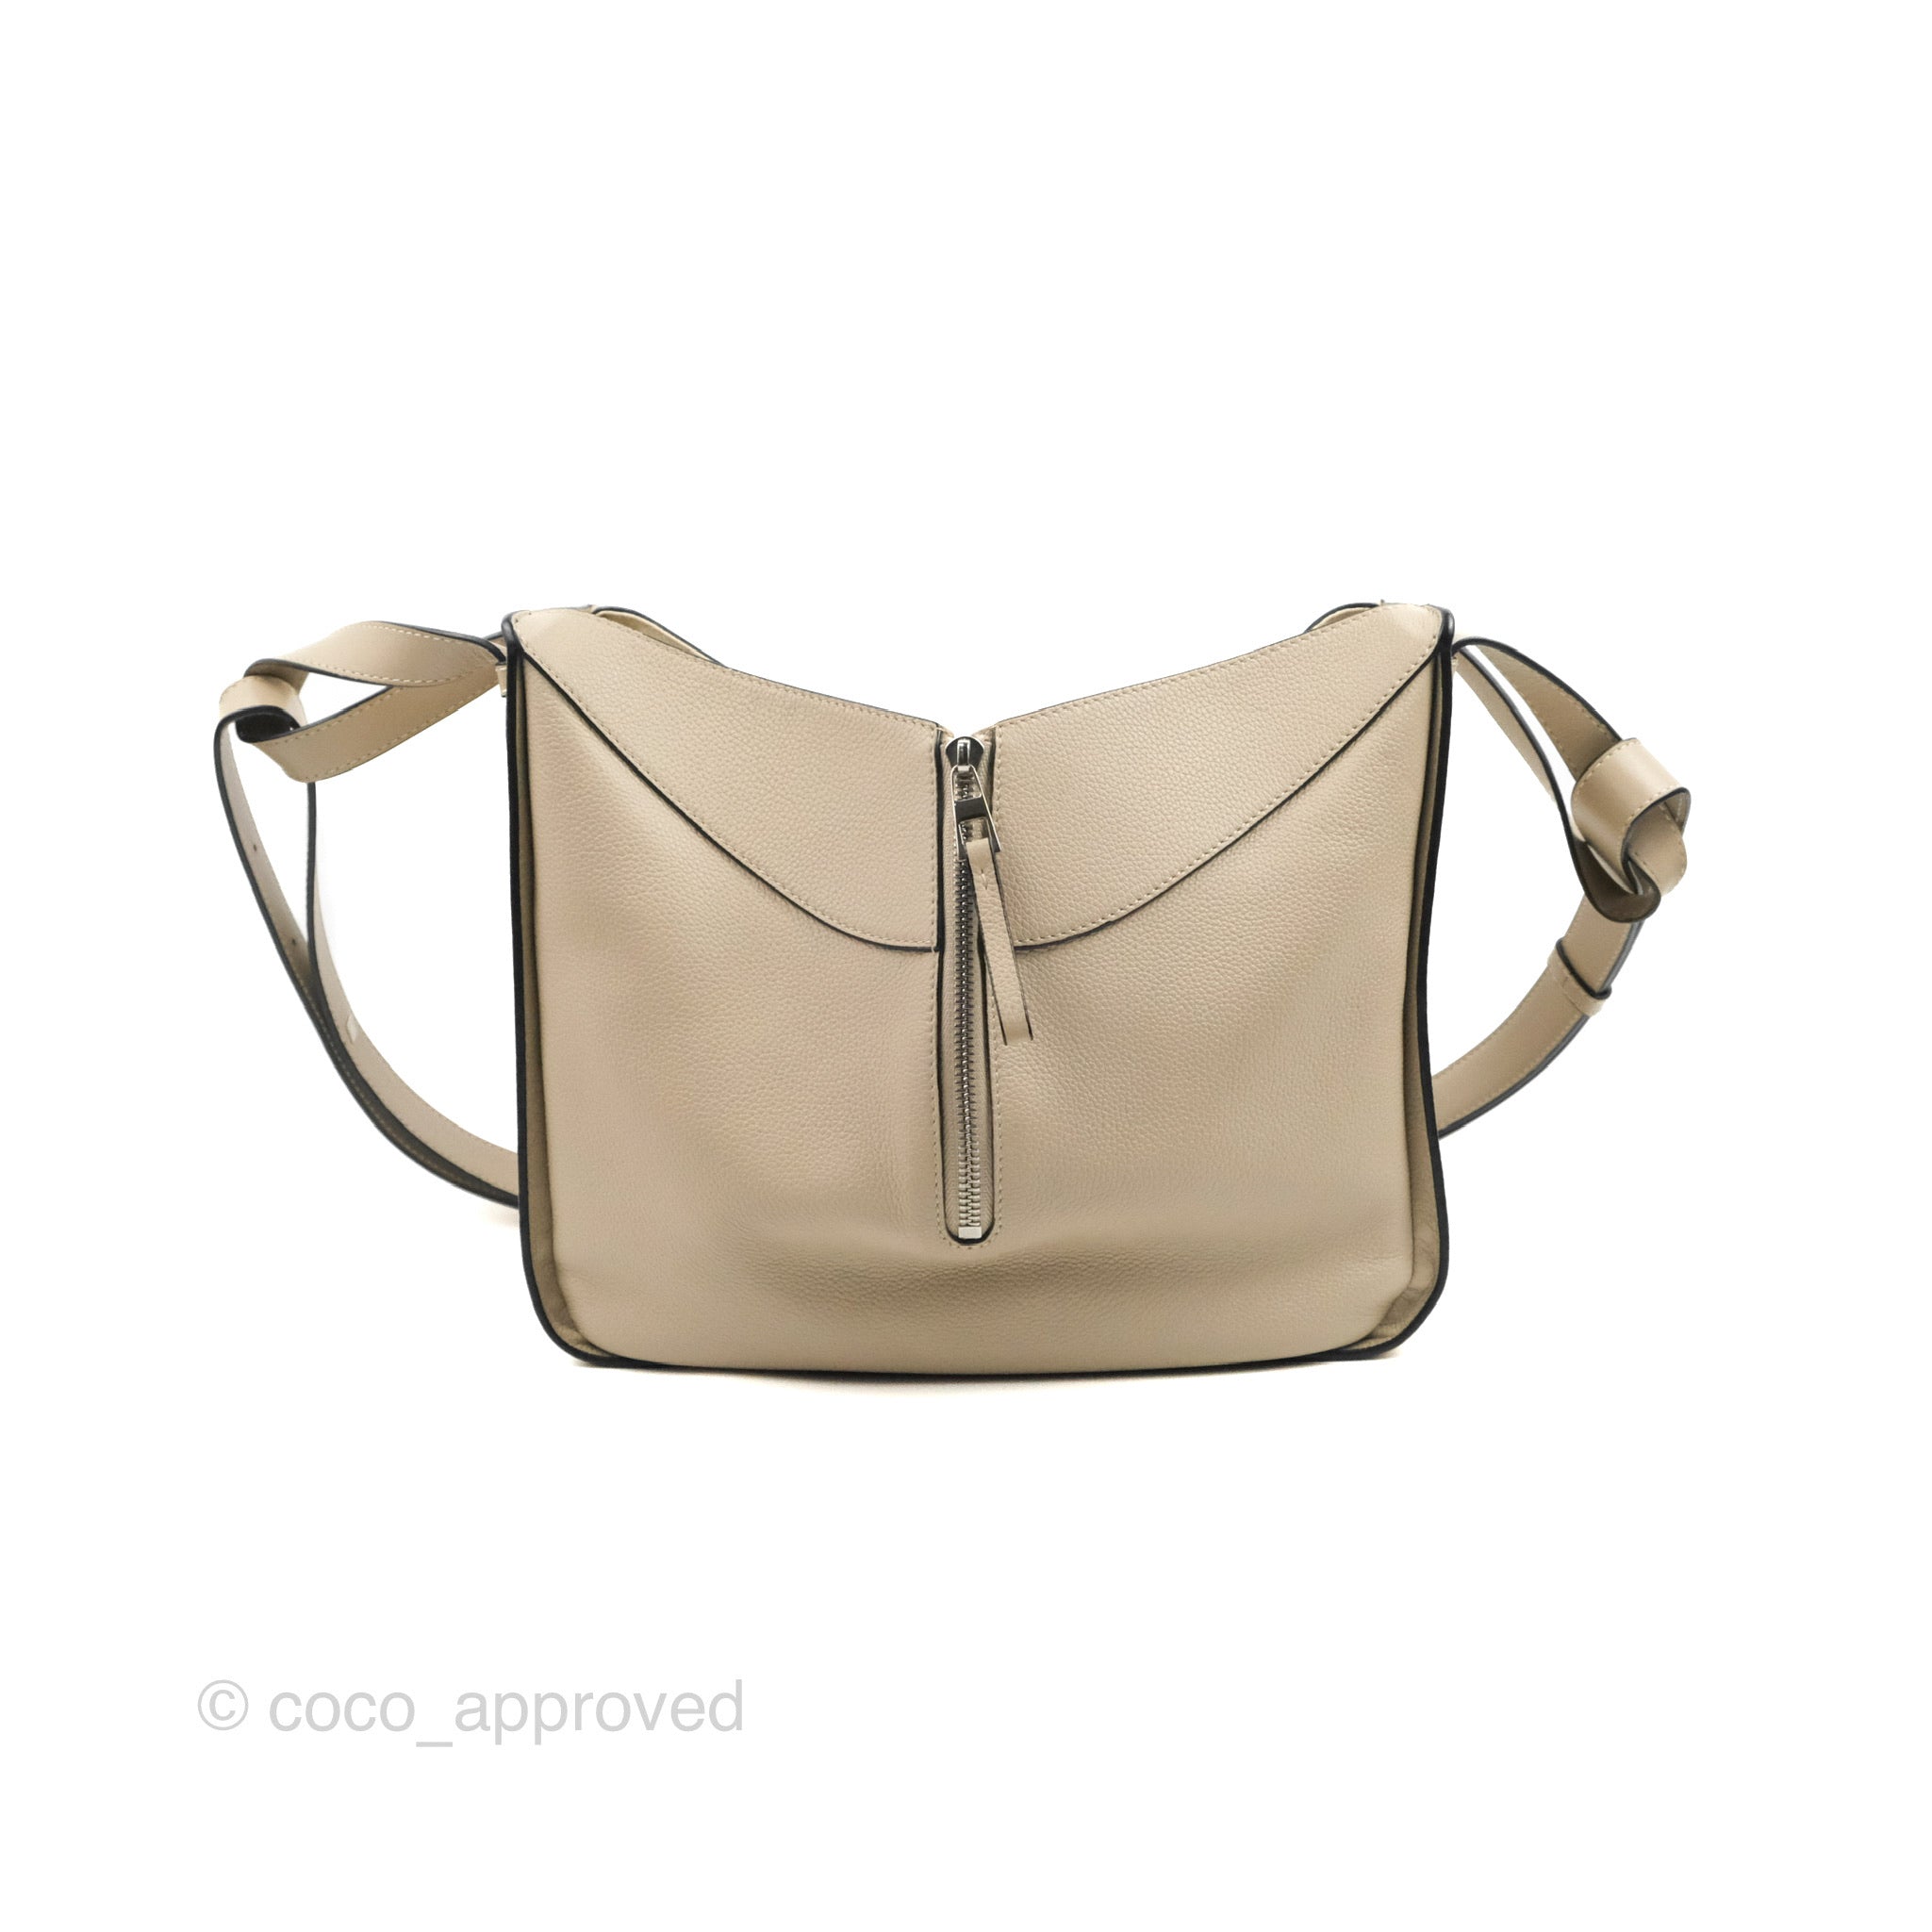 Loewe - Compact Hammock Sand Leather Bag